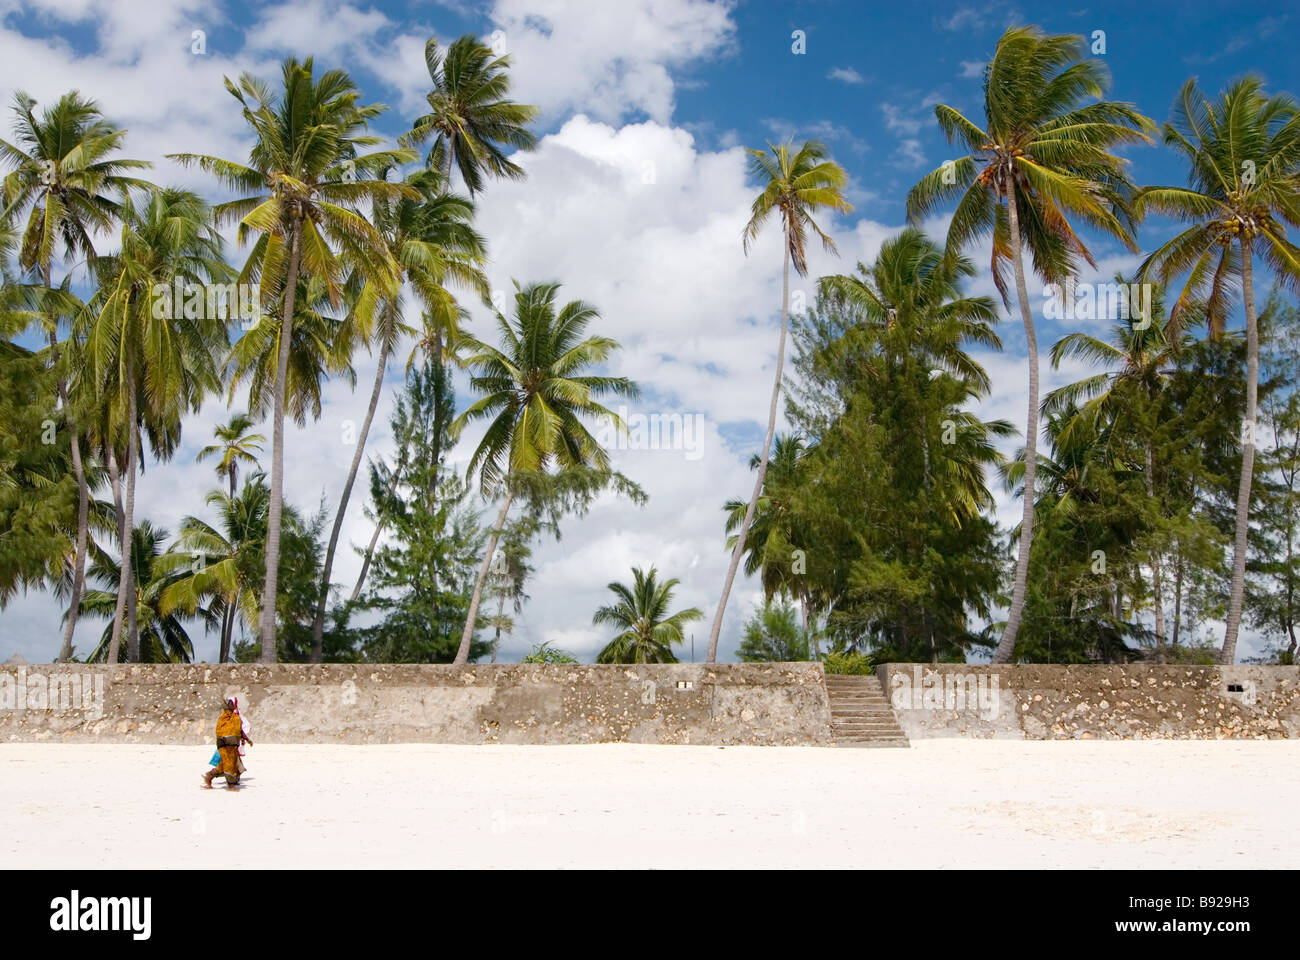 Two local women wearing kikois walking along the beach, Zanzibar Island Paje Unguja Island Zanzibar Tanzania Stock Photo